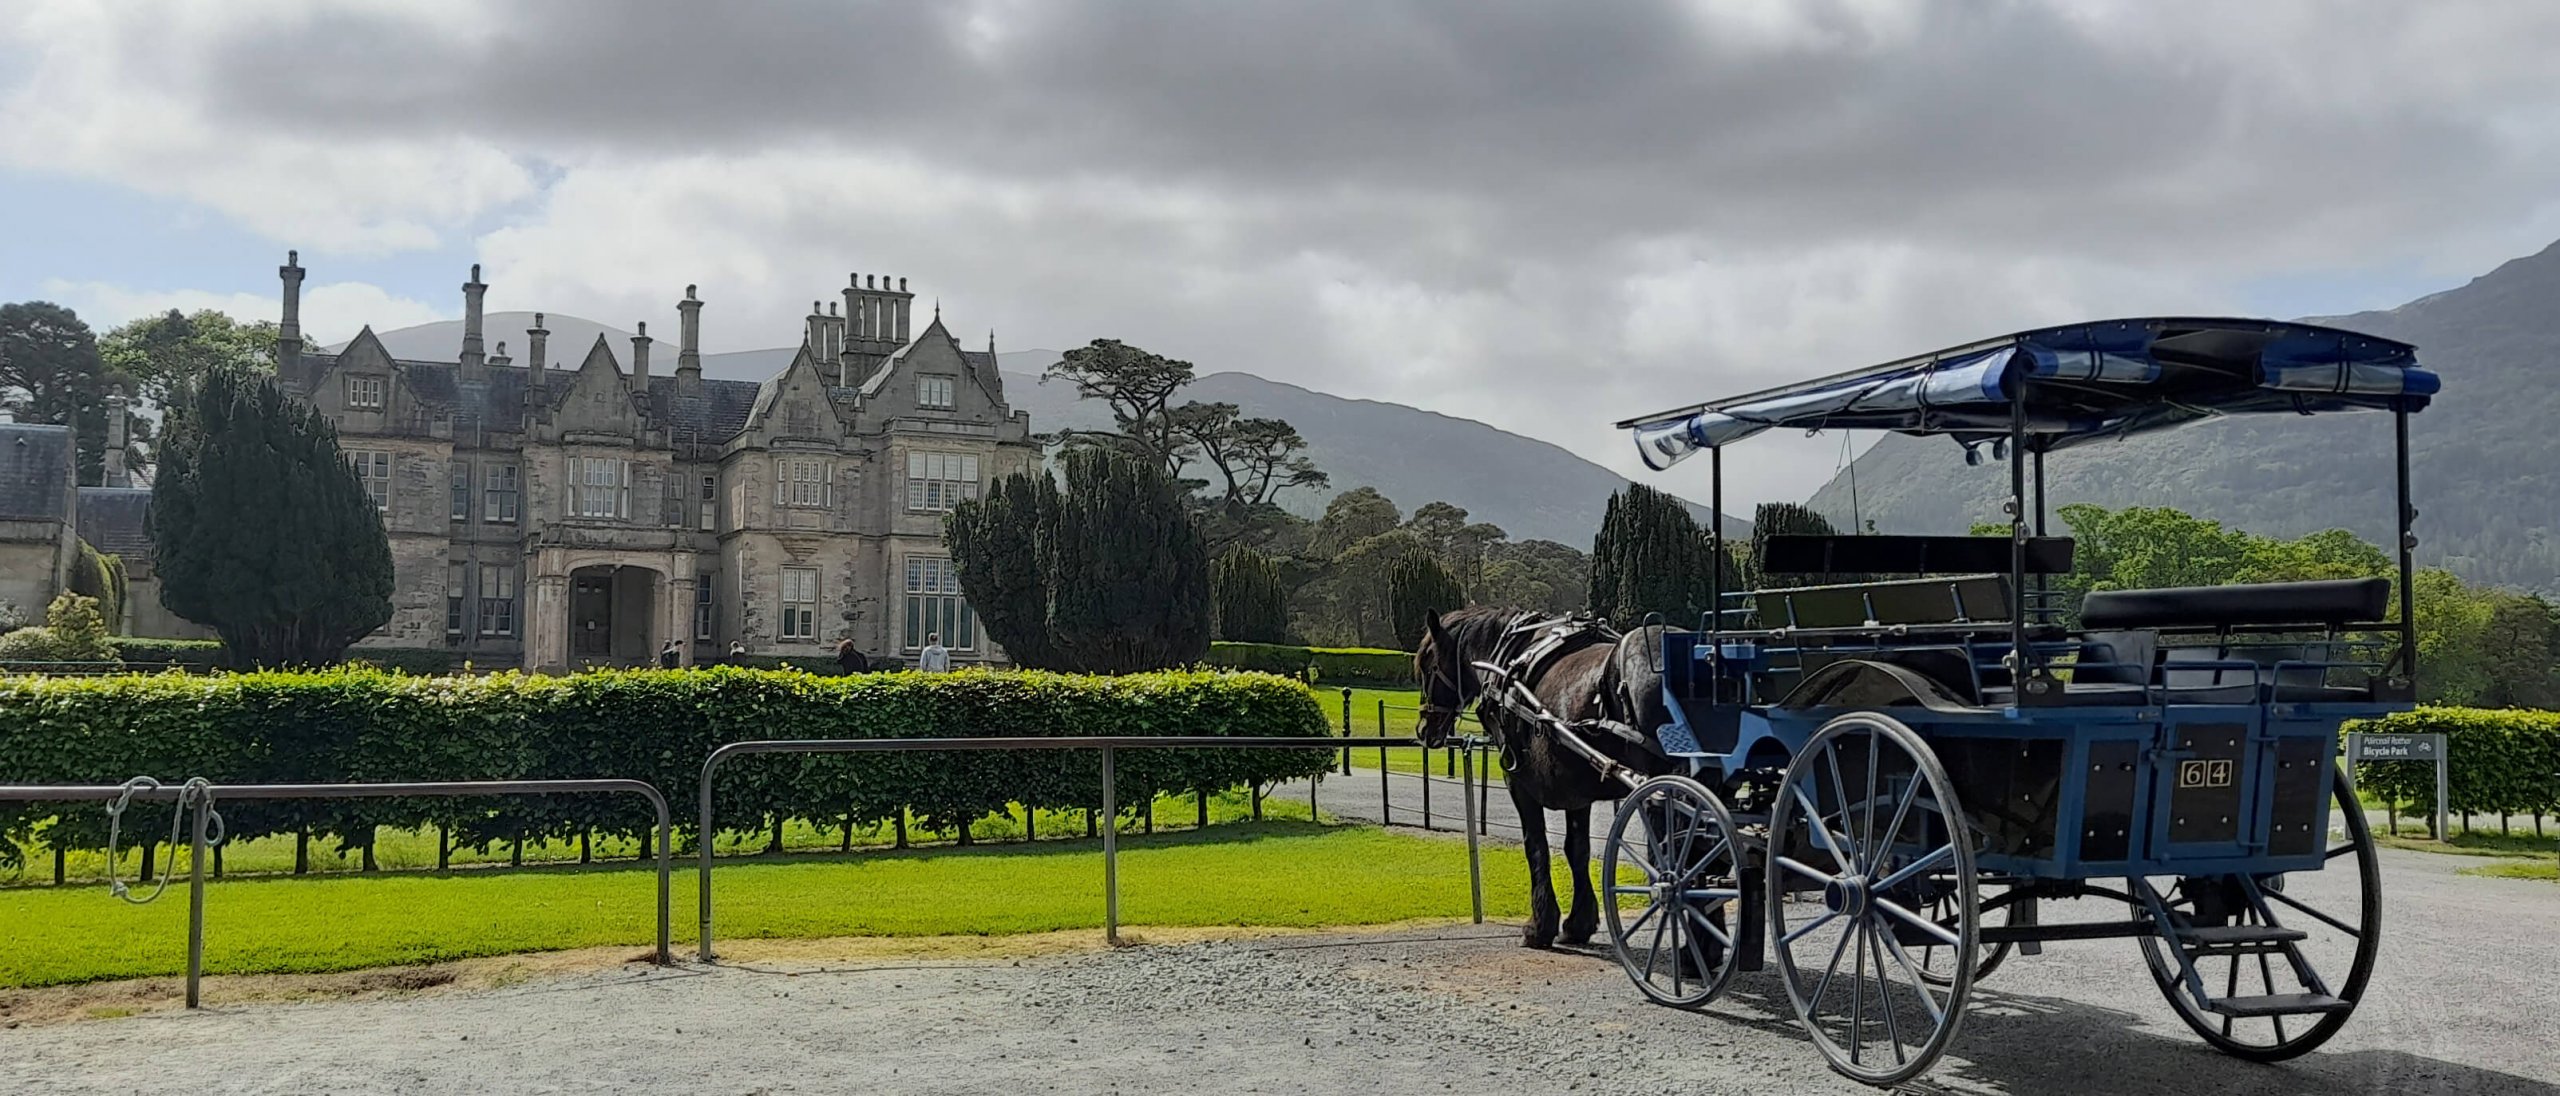 Jaunting carriage in Killarney National Park, Ireland